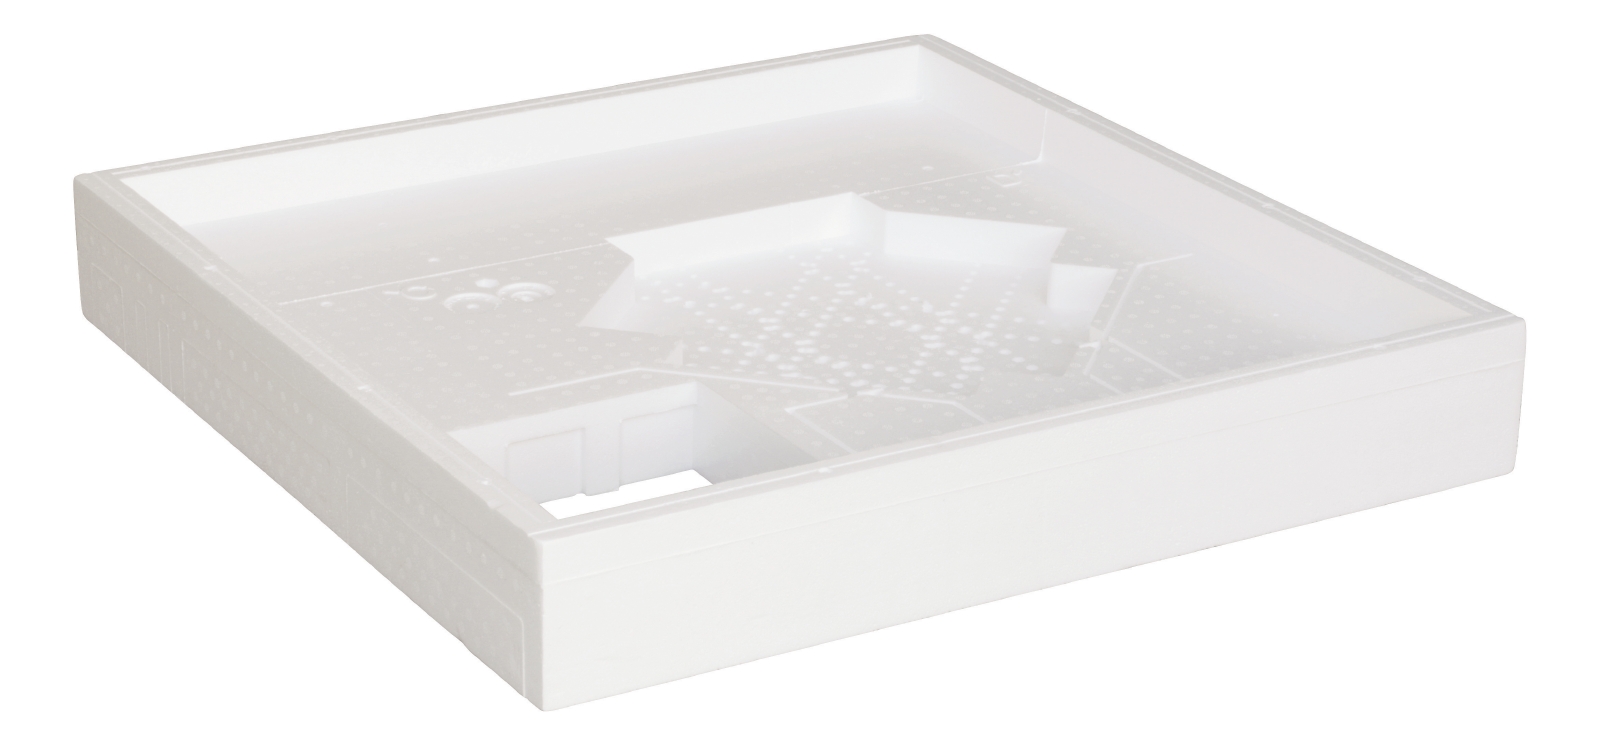 'aquaSu® Wannenträger tEso square, Brausetassen-Unterbau aus Styropor in 100 x 100 x 2,5 cm